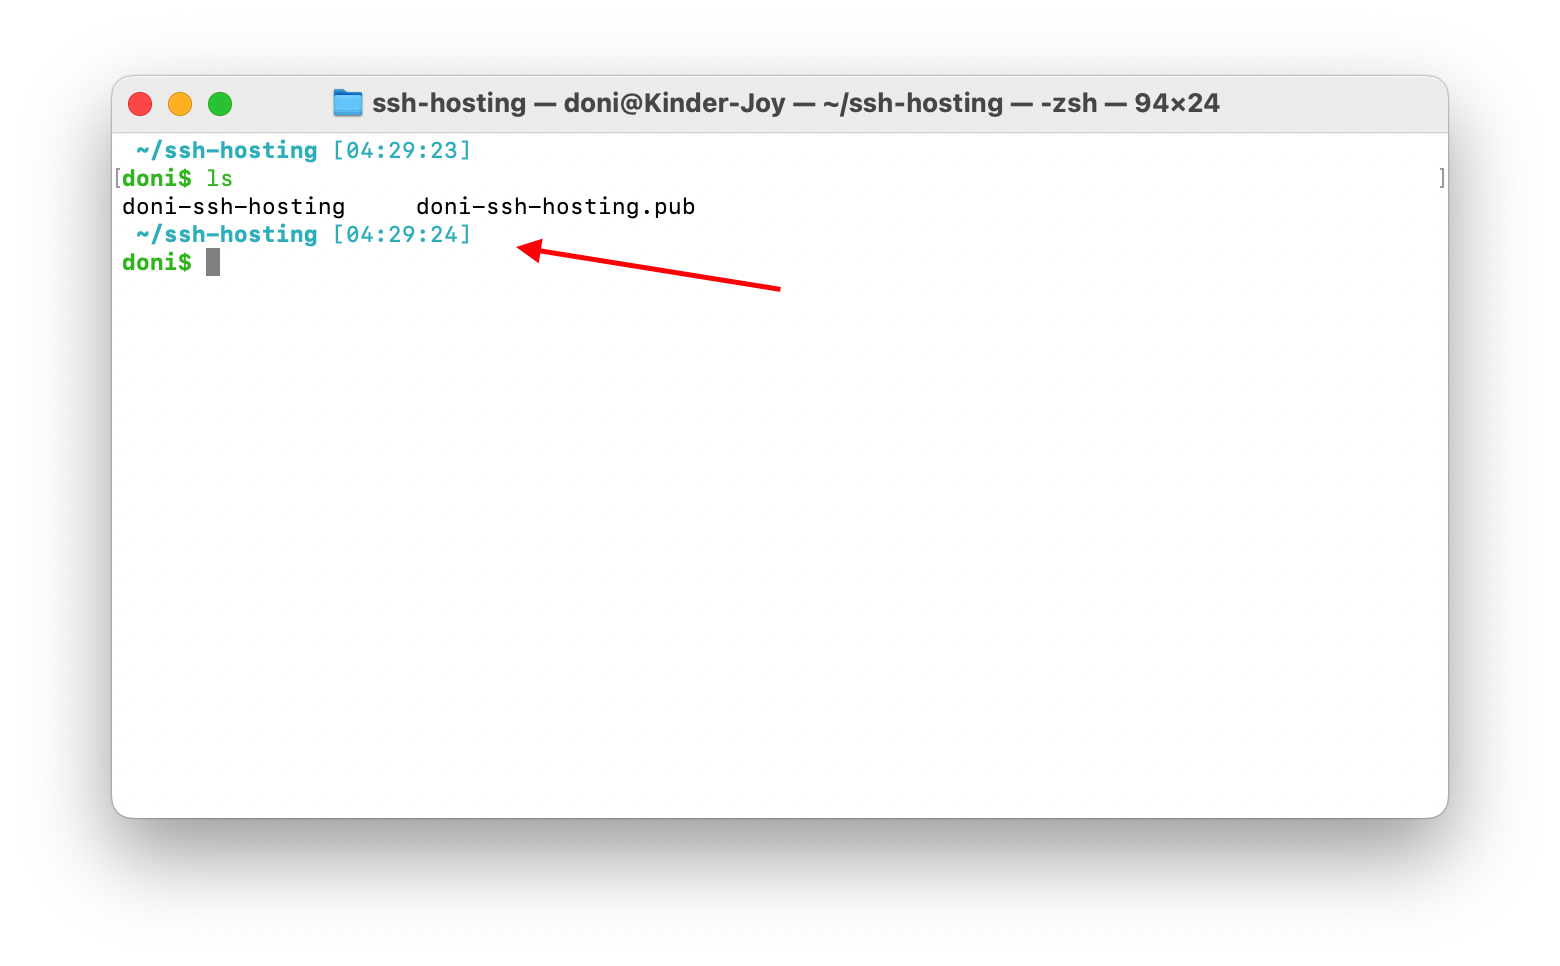 Cara Akses SSH cPanel Hosting